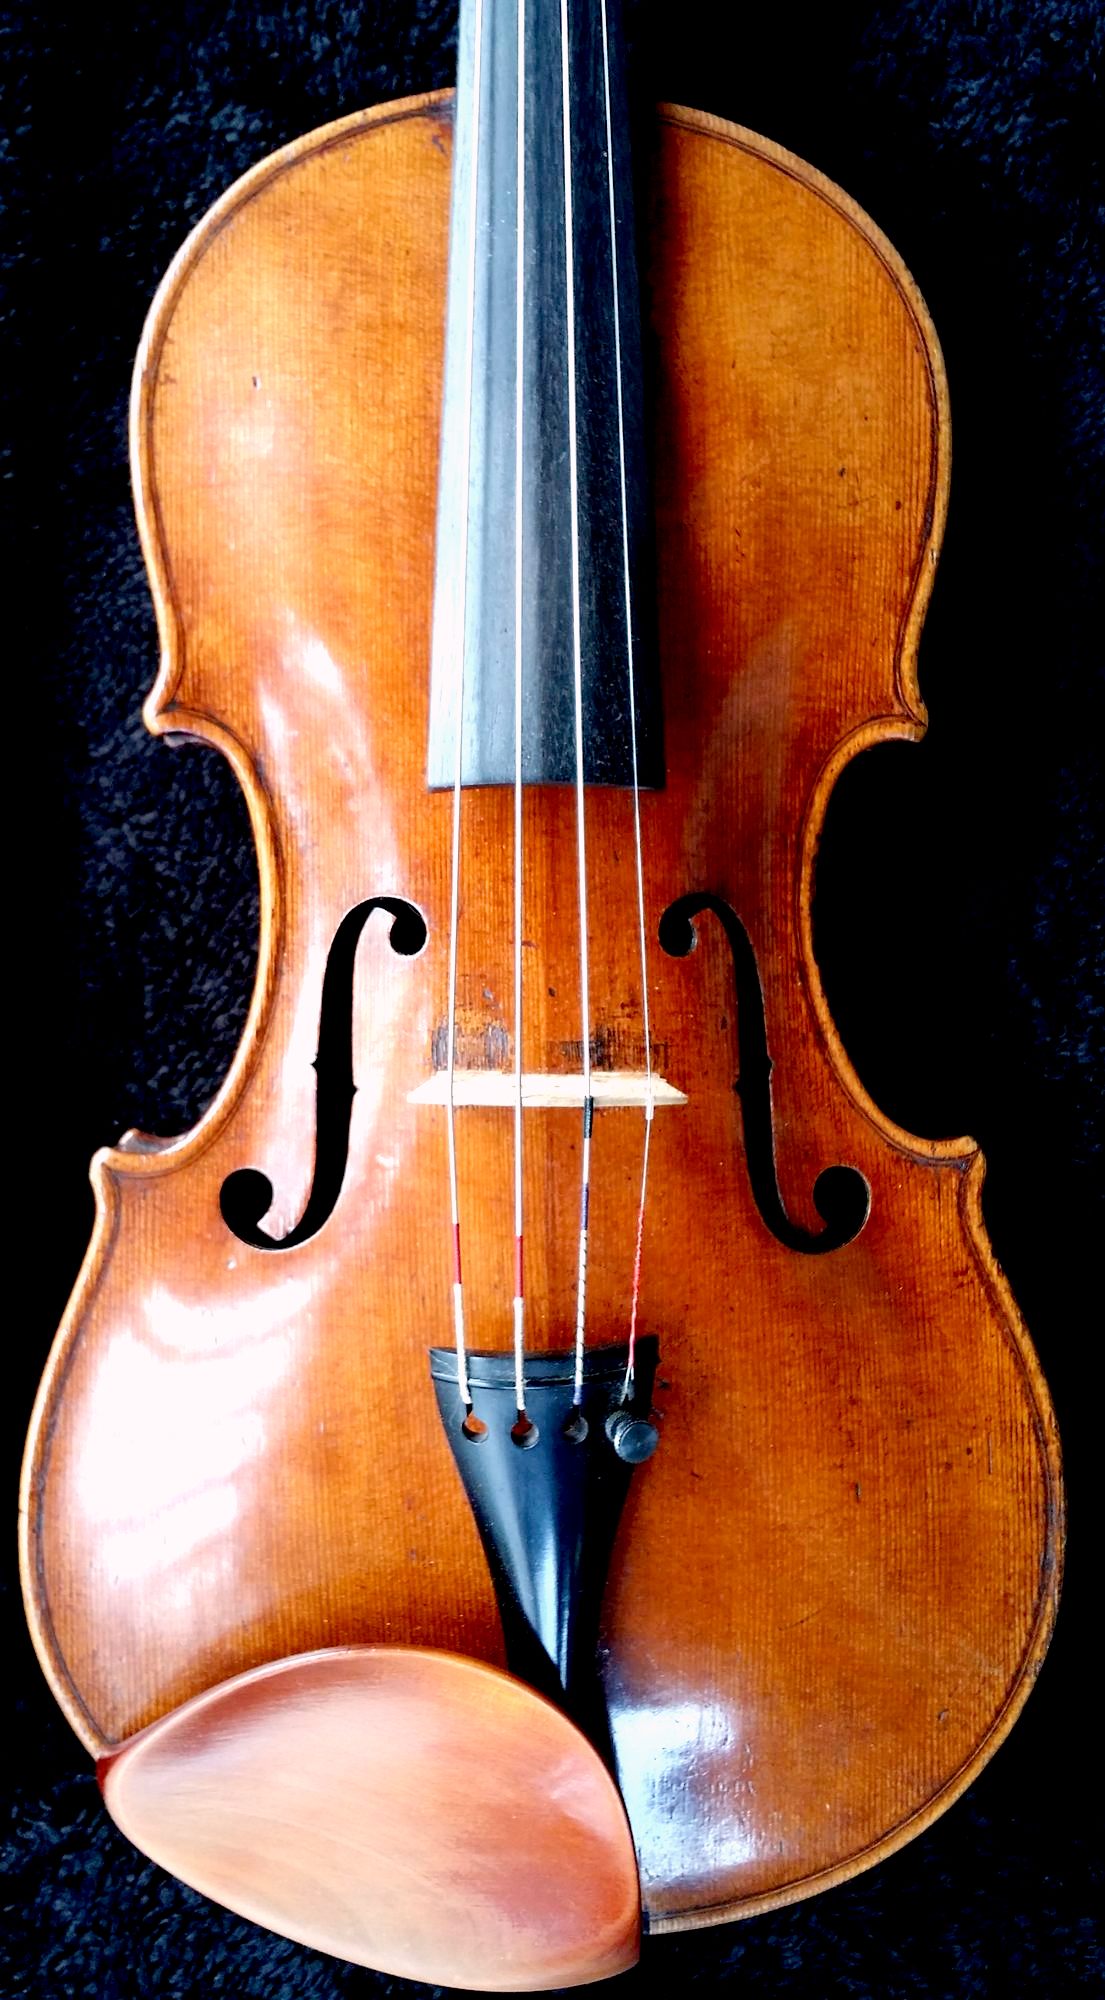 Maurizi violin belly